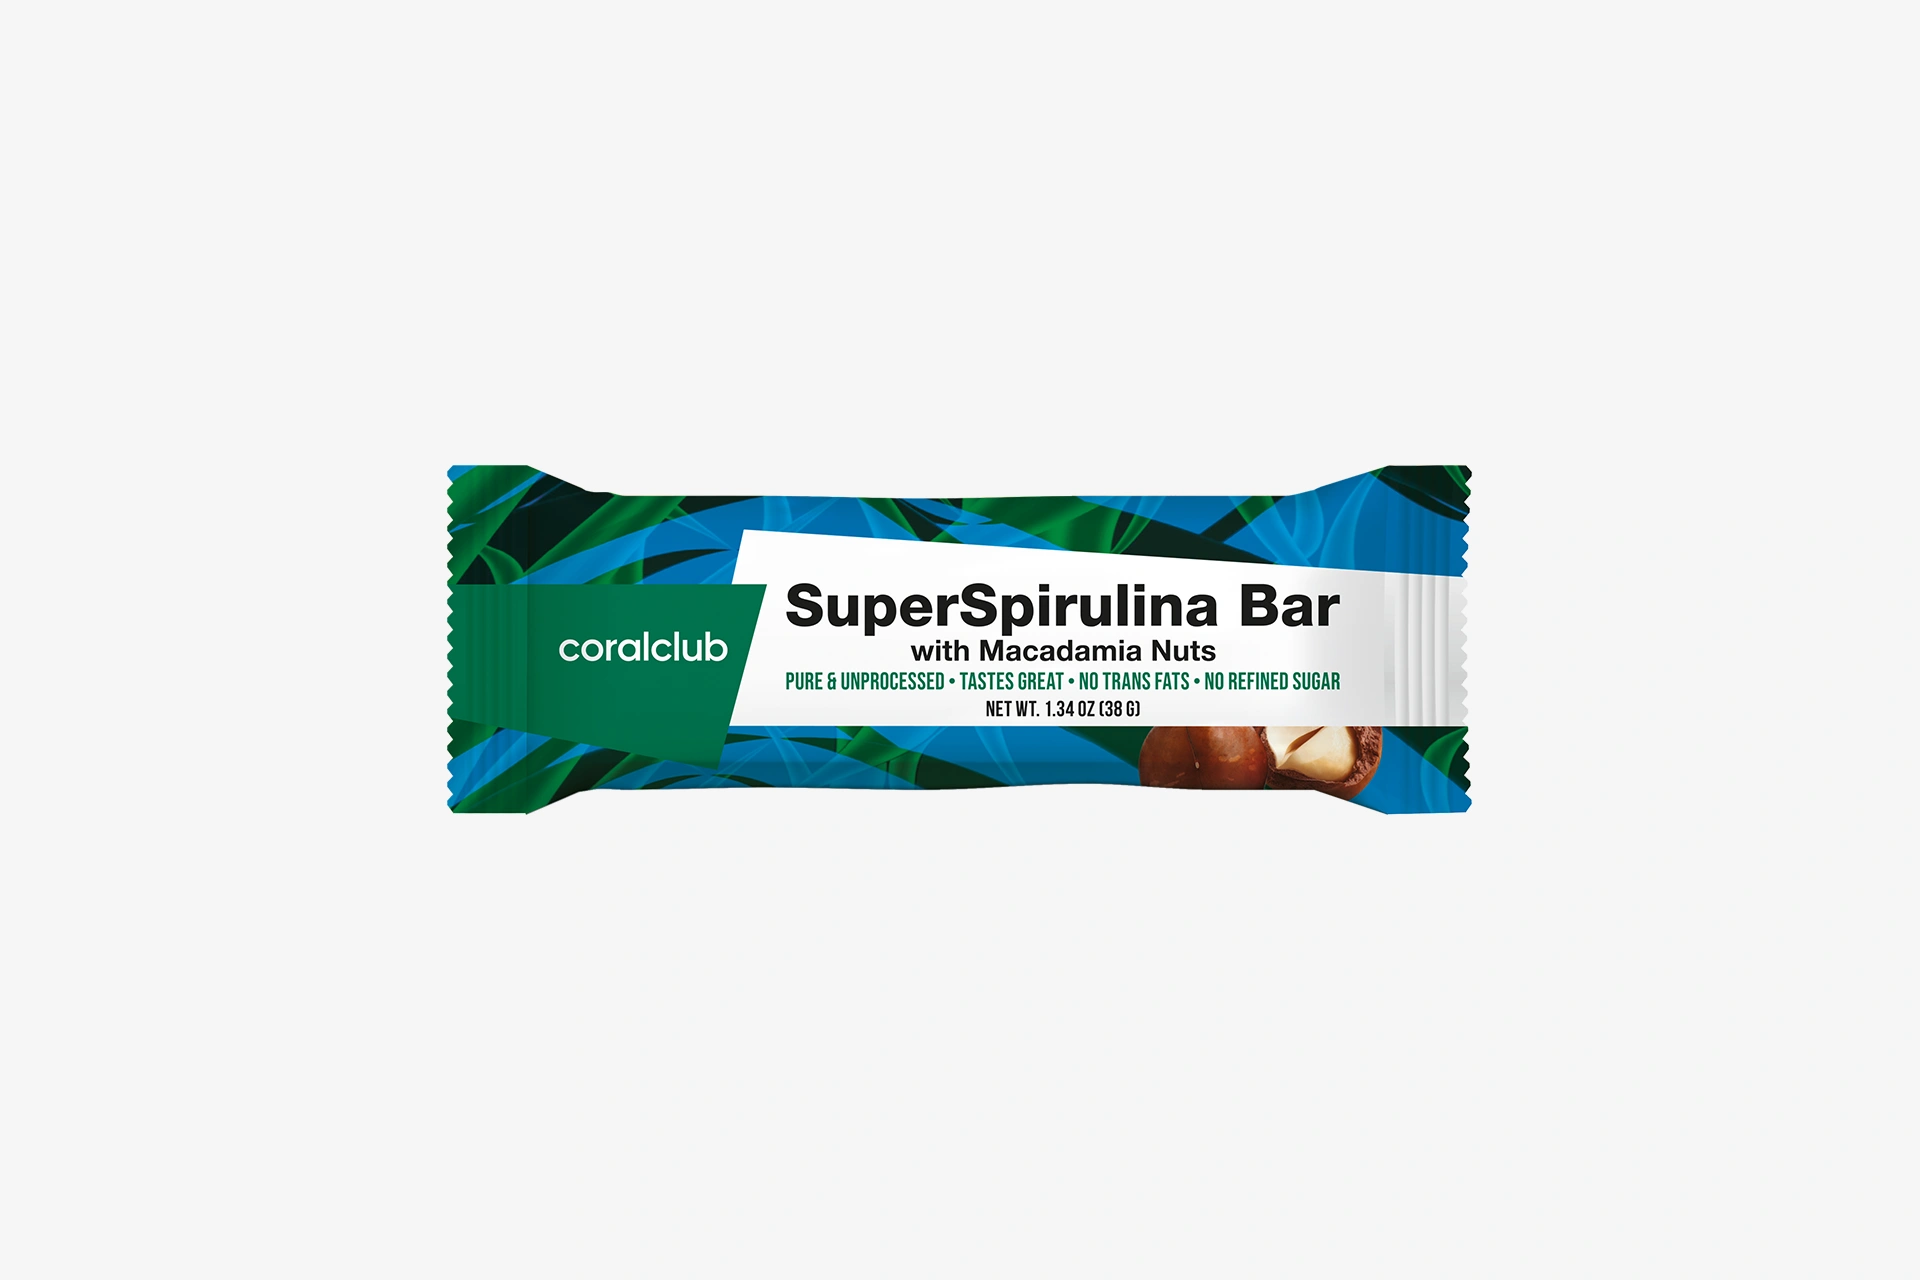 Super Spirulina Bar with Macadamia Nuts